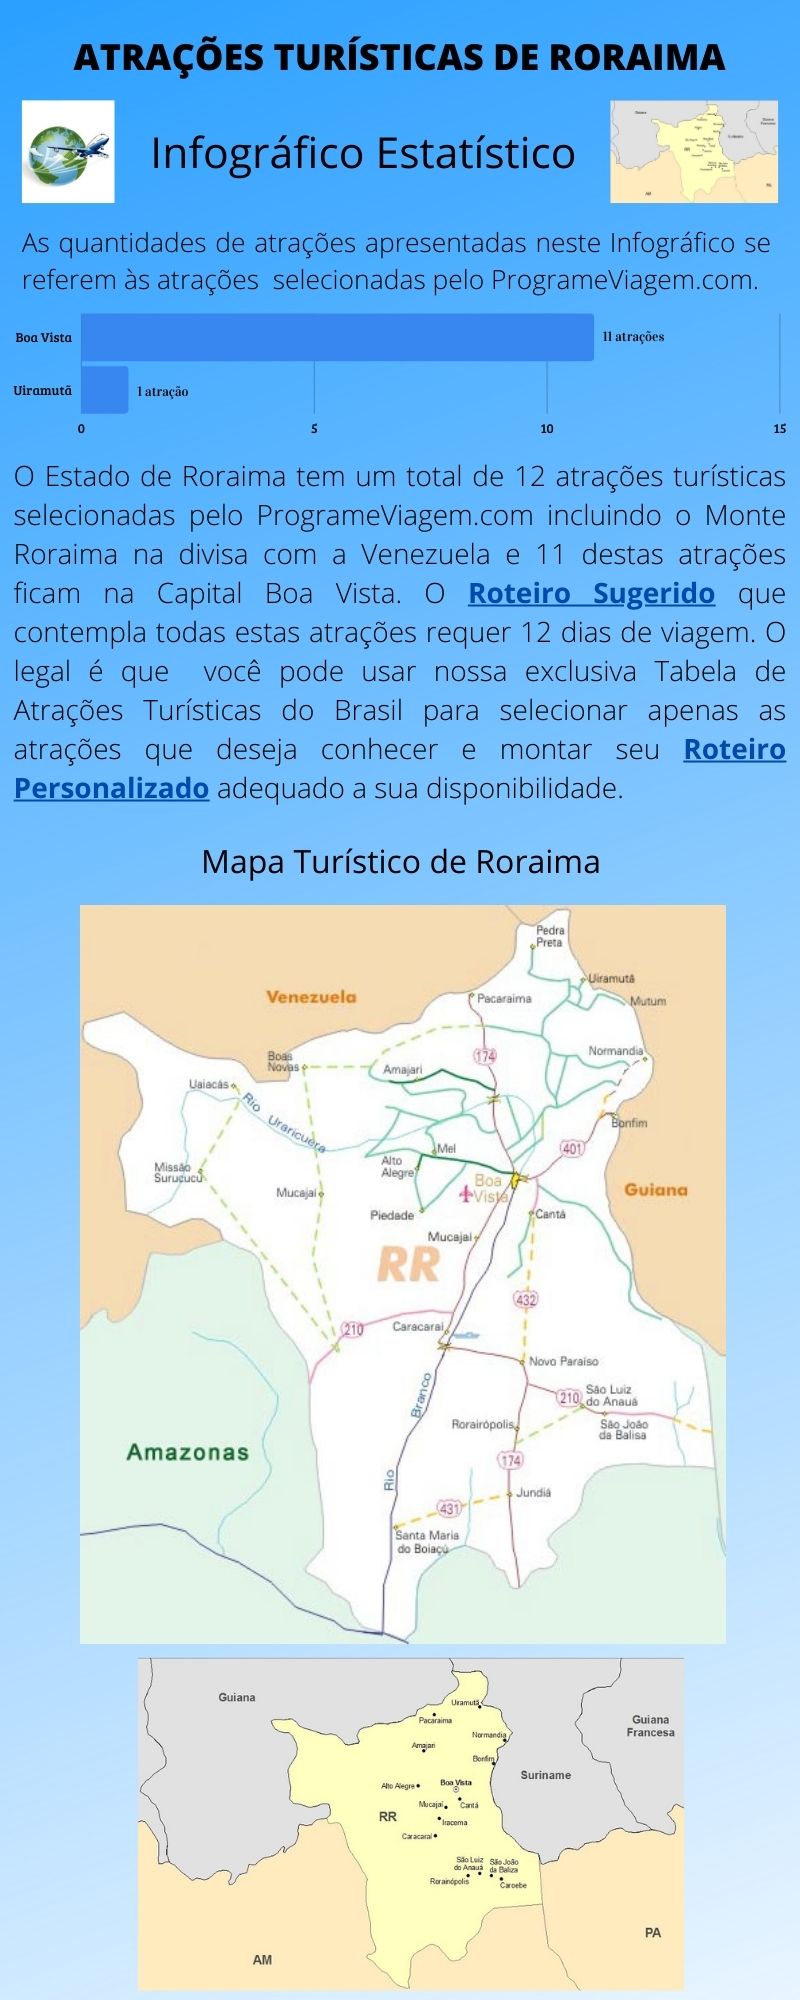 Infográfico Atrações Turísticas de Roraima